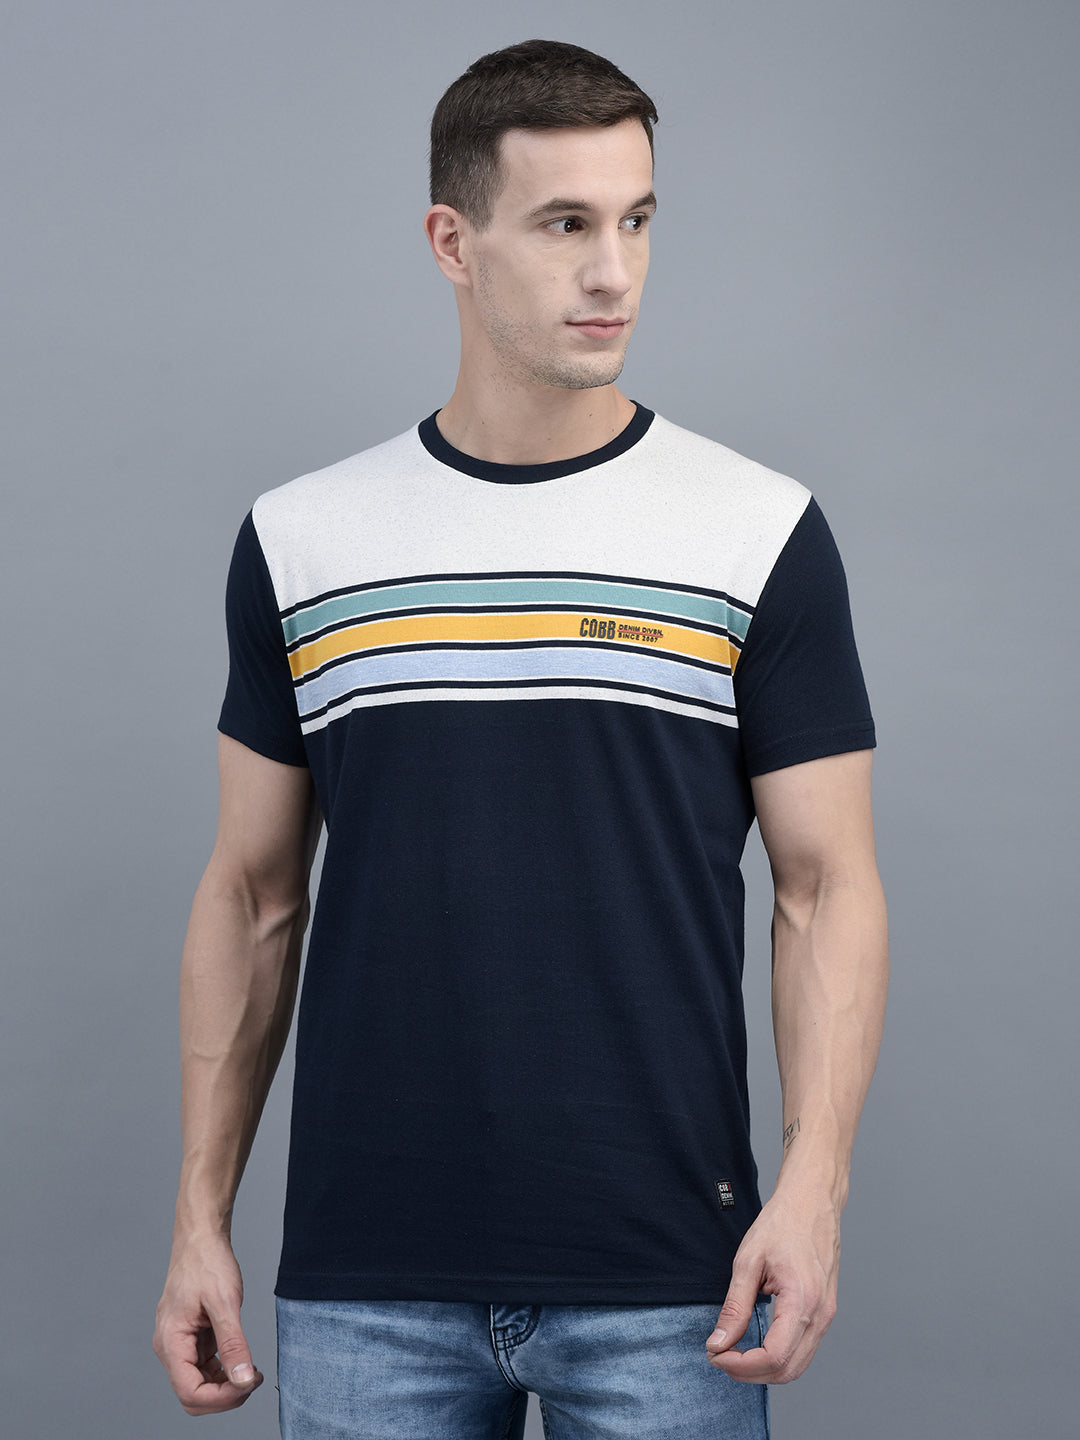 Cobb Navy Blue Striped Round Neck T-Shirt NAVY BLUE